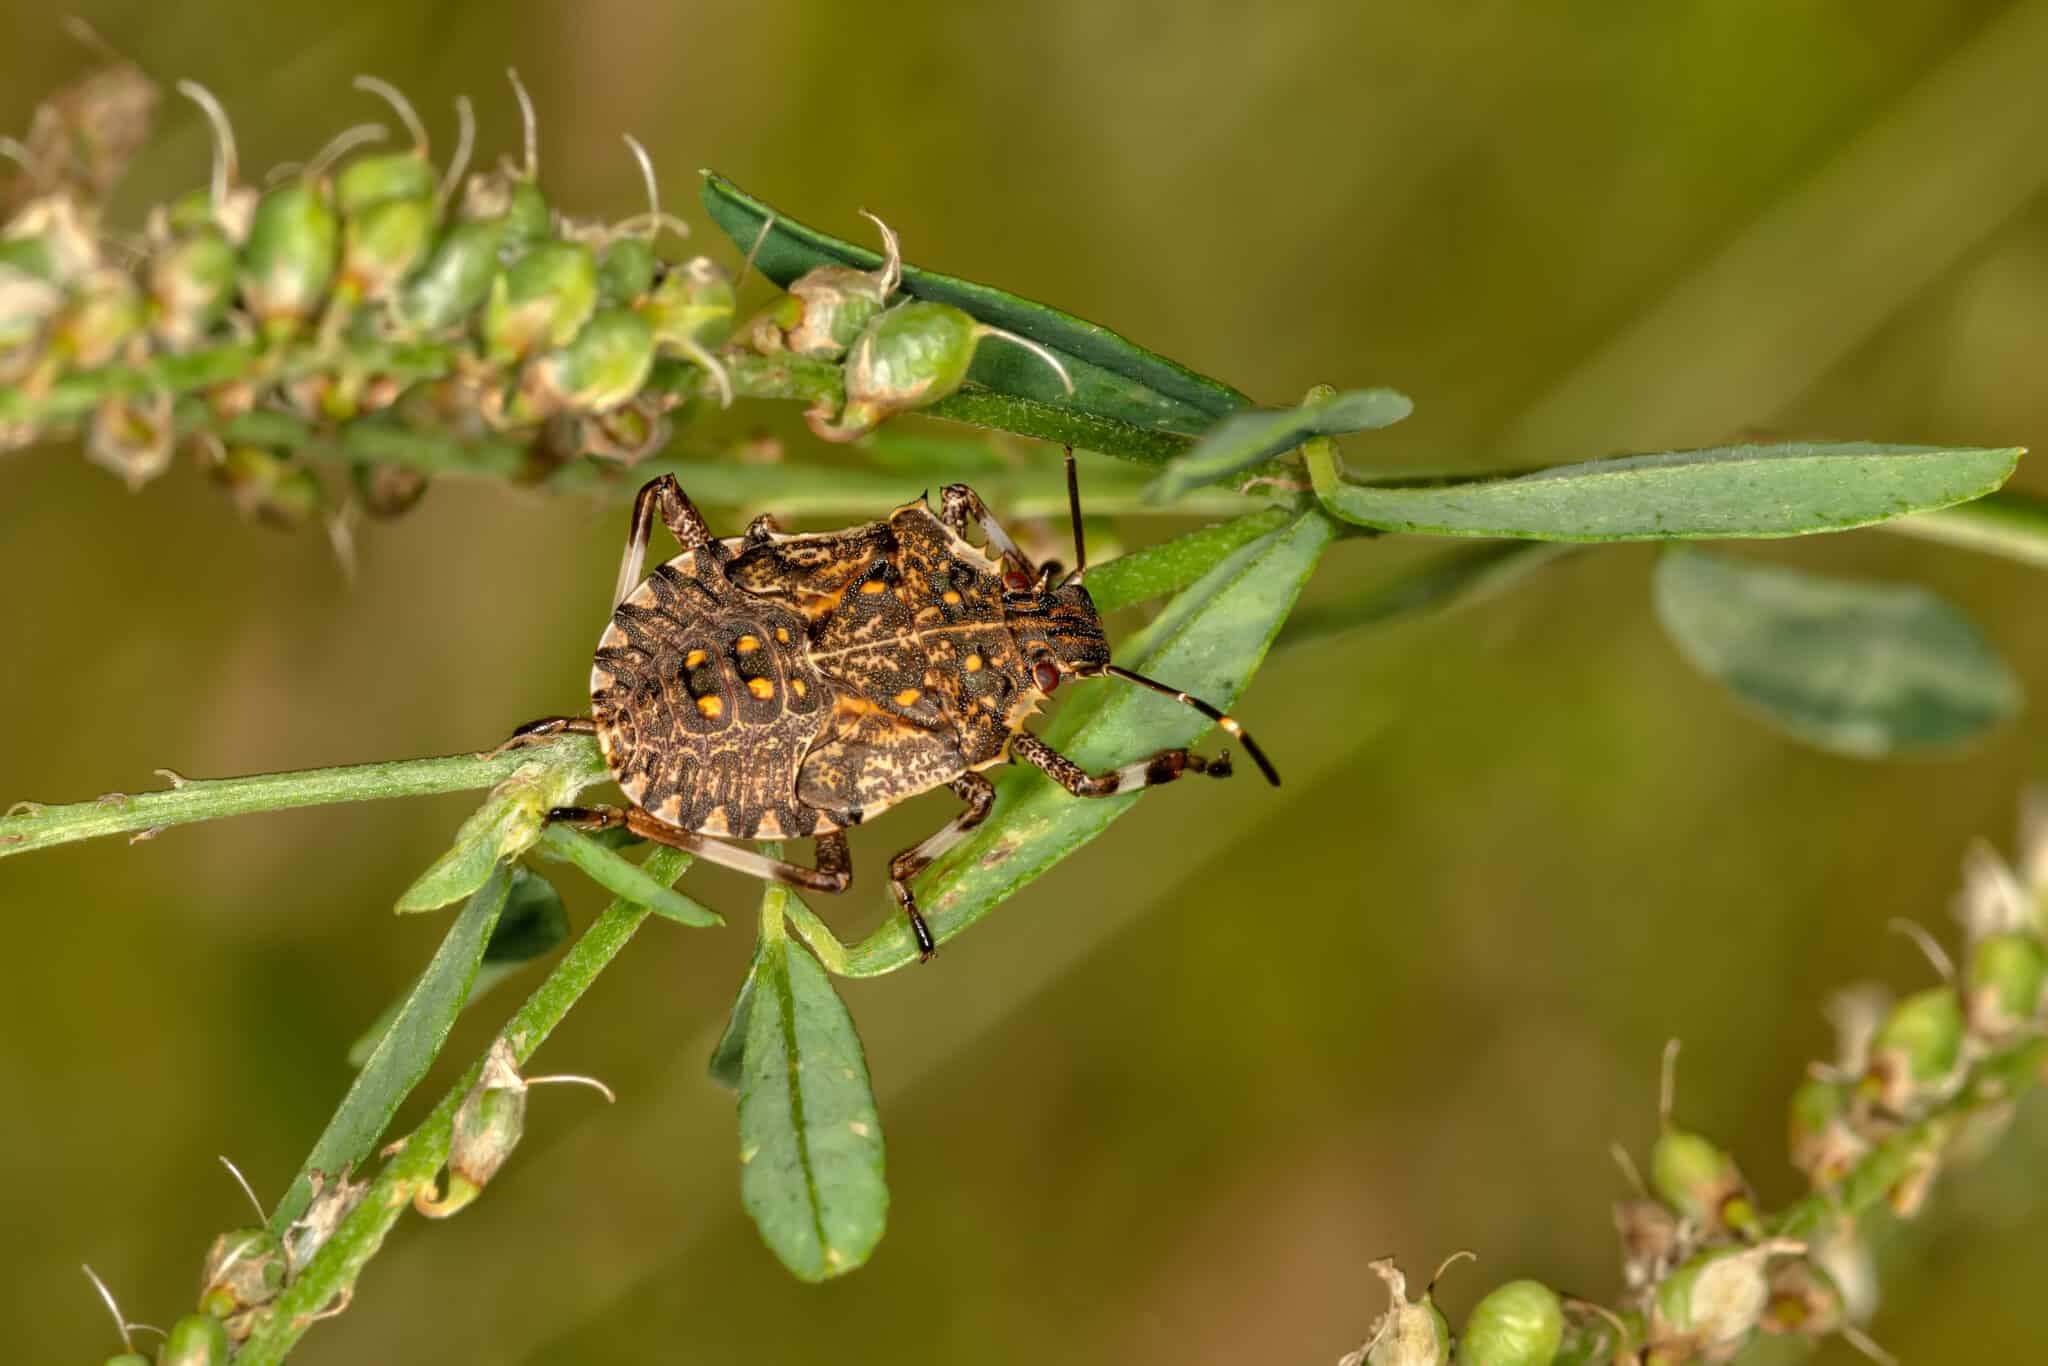 Brown marmorated stink bug (Halyomorpha halys) On Grass.